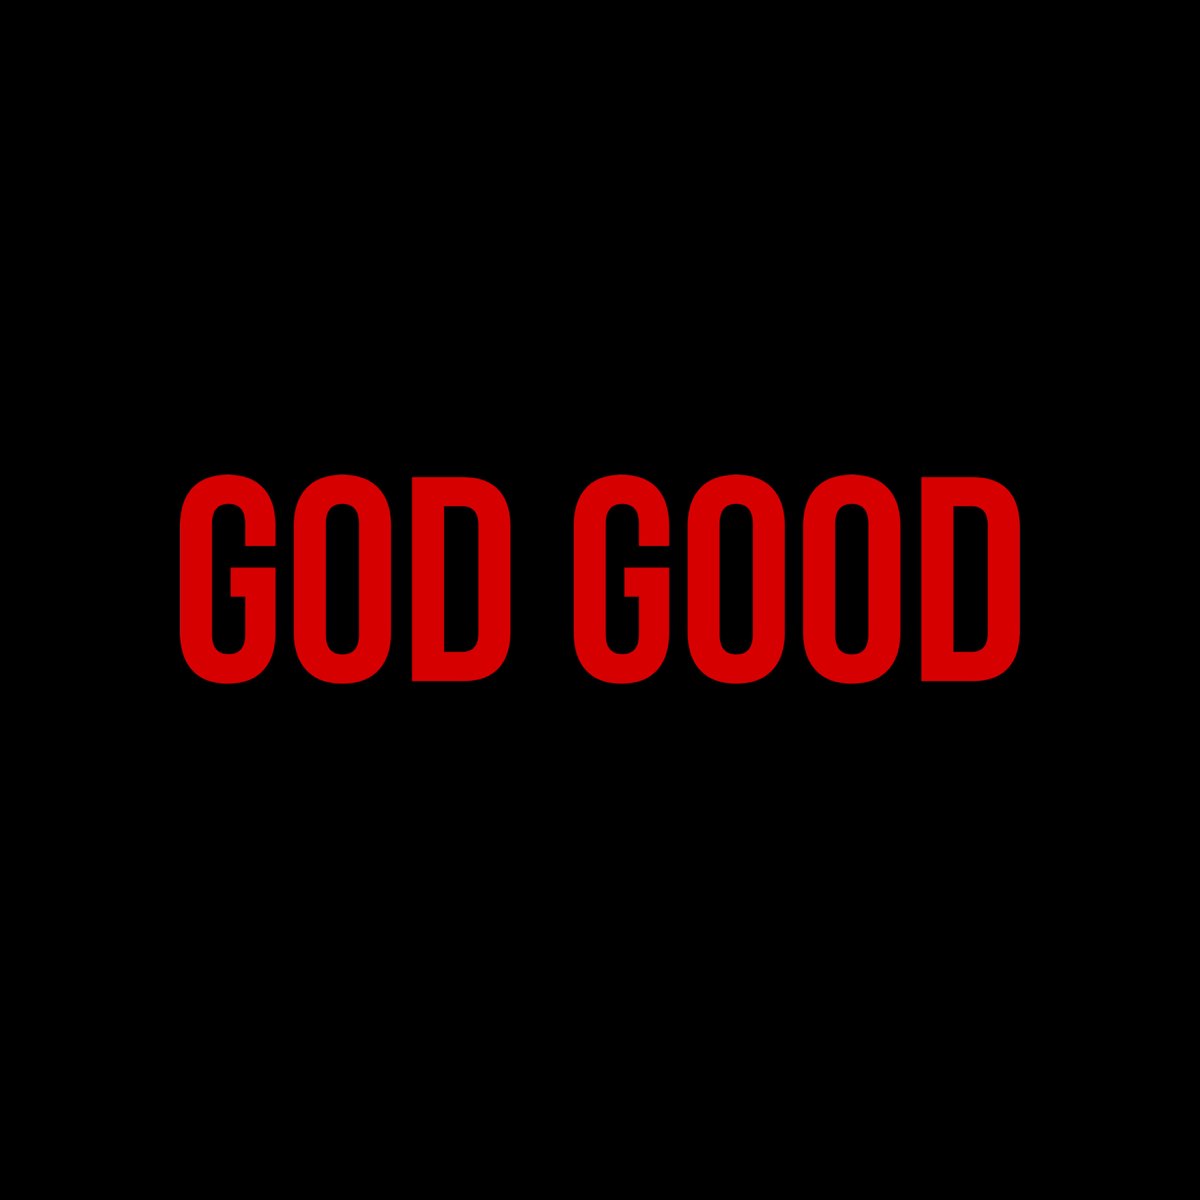 Caleb Gordon - God Good